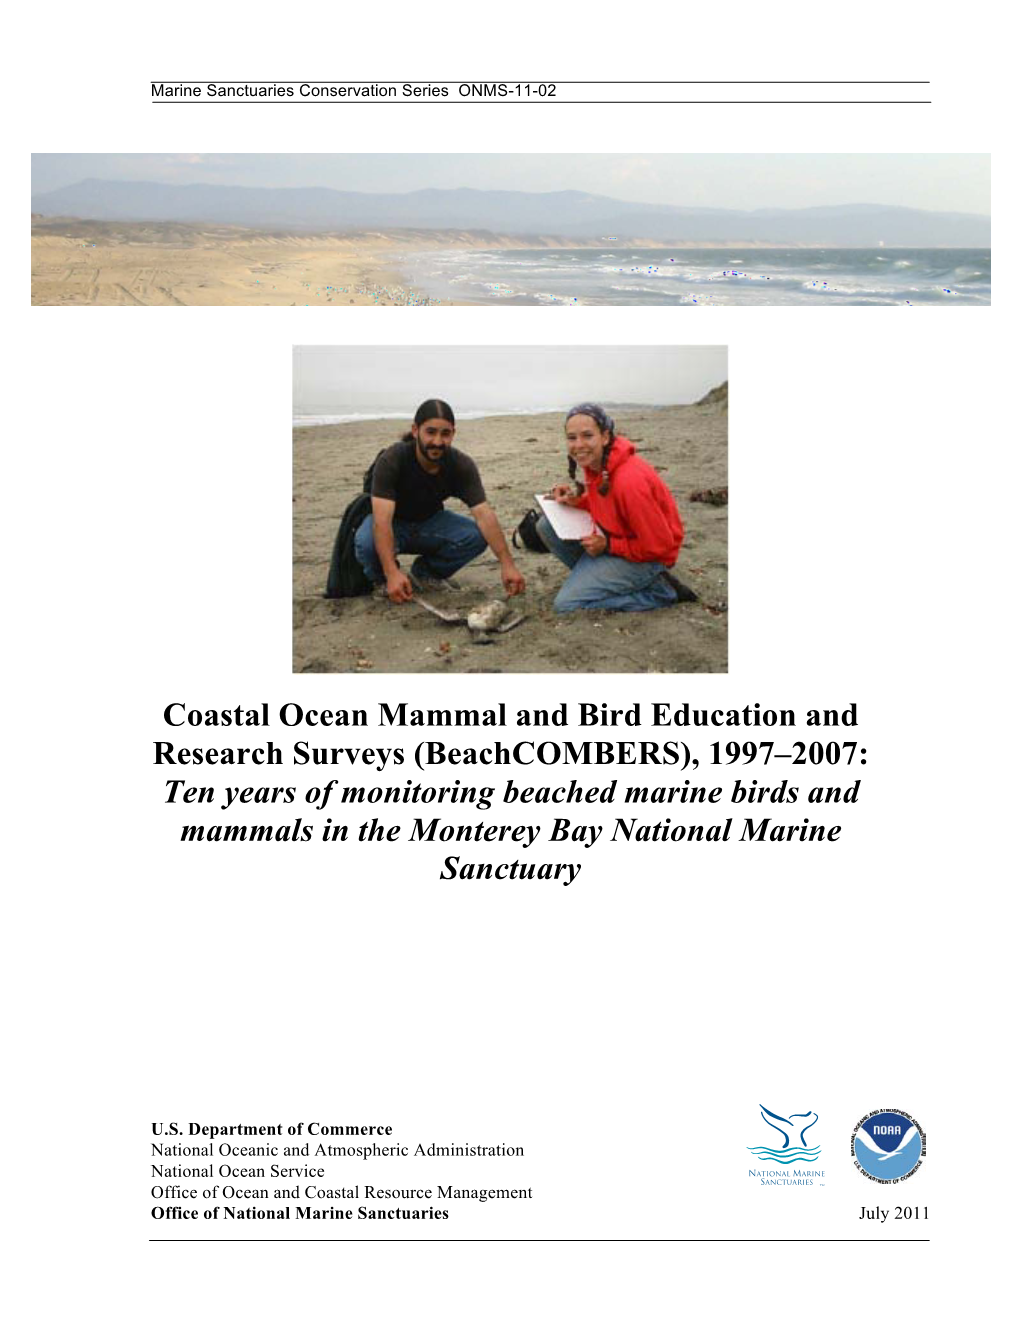 (Beachcombers), 1997–2007: Ten Years of Monitoring Beached Marine Birds and Mammals in the Monterey Bay National Marine Sanctuary